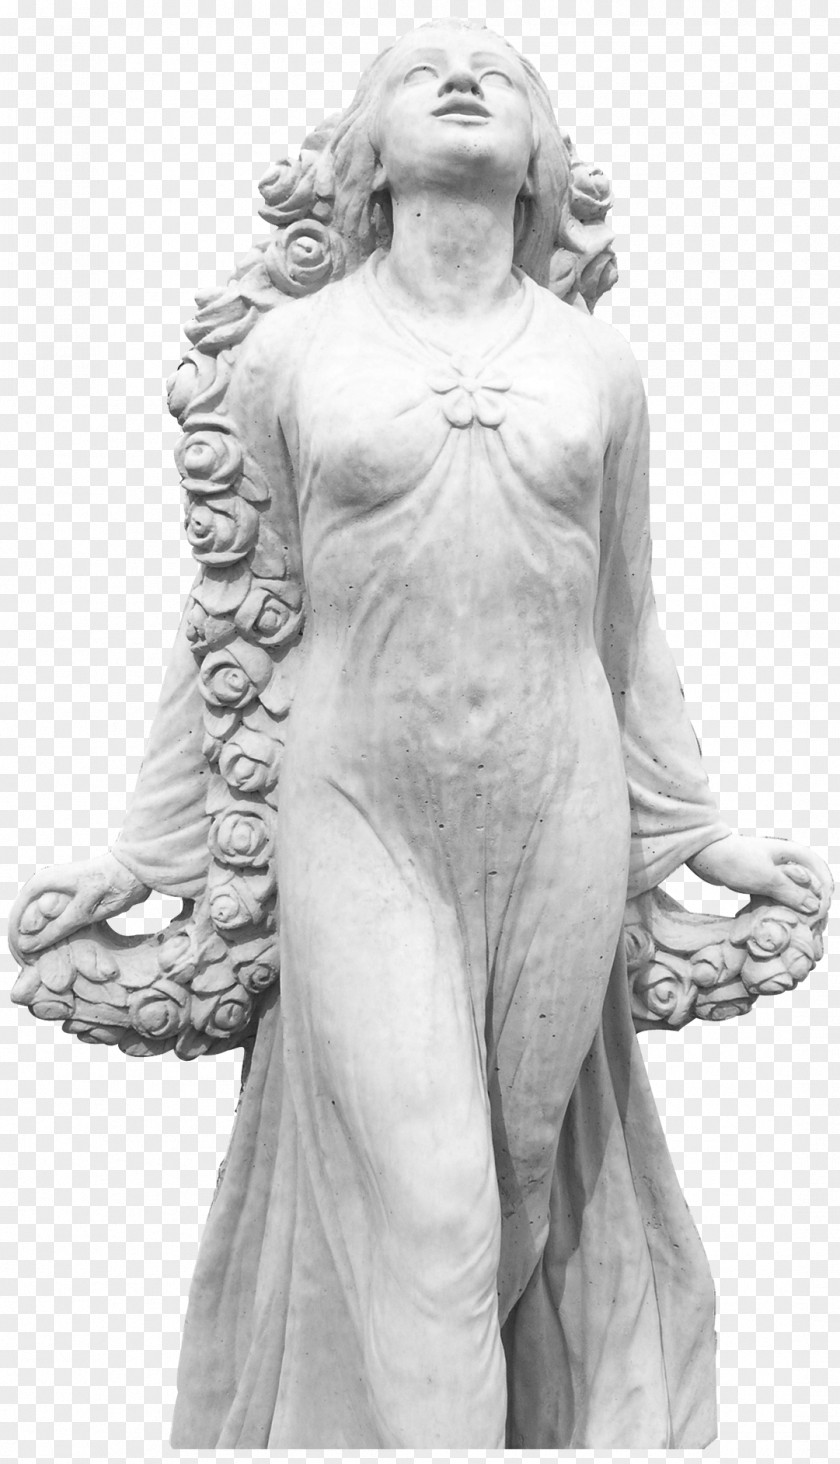 Statues Statue Classical Sculpture Architecture Figurine PNG